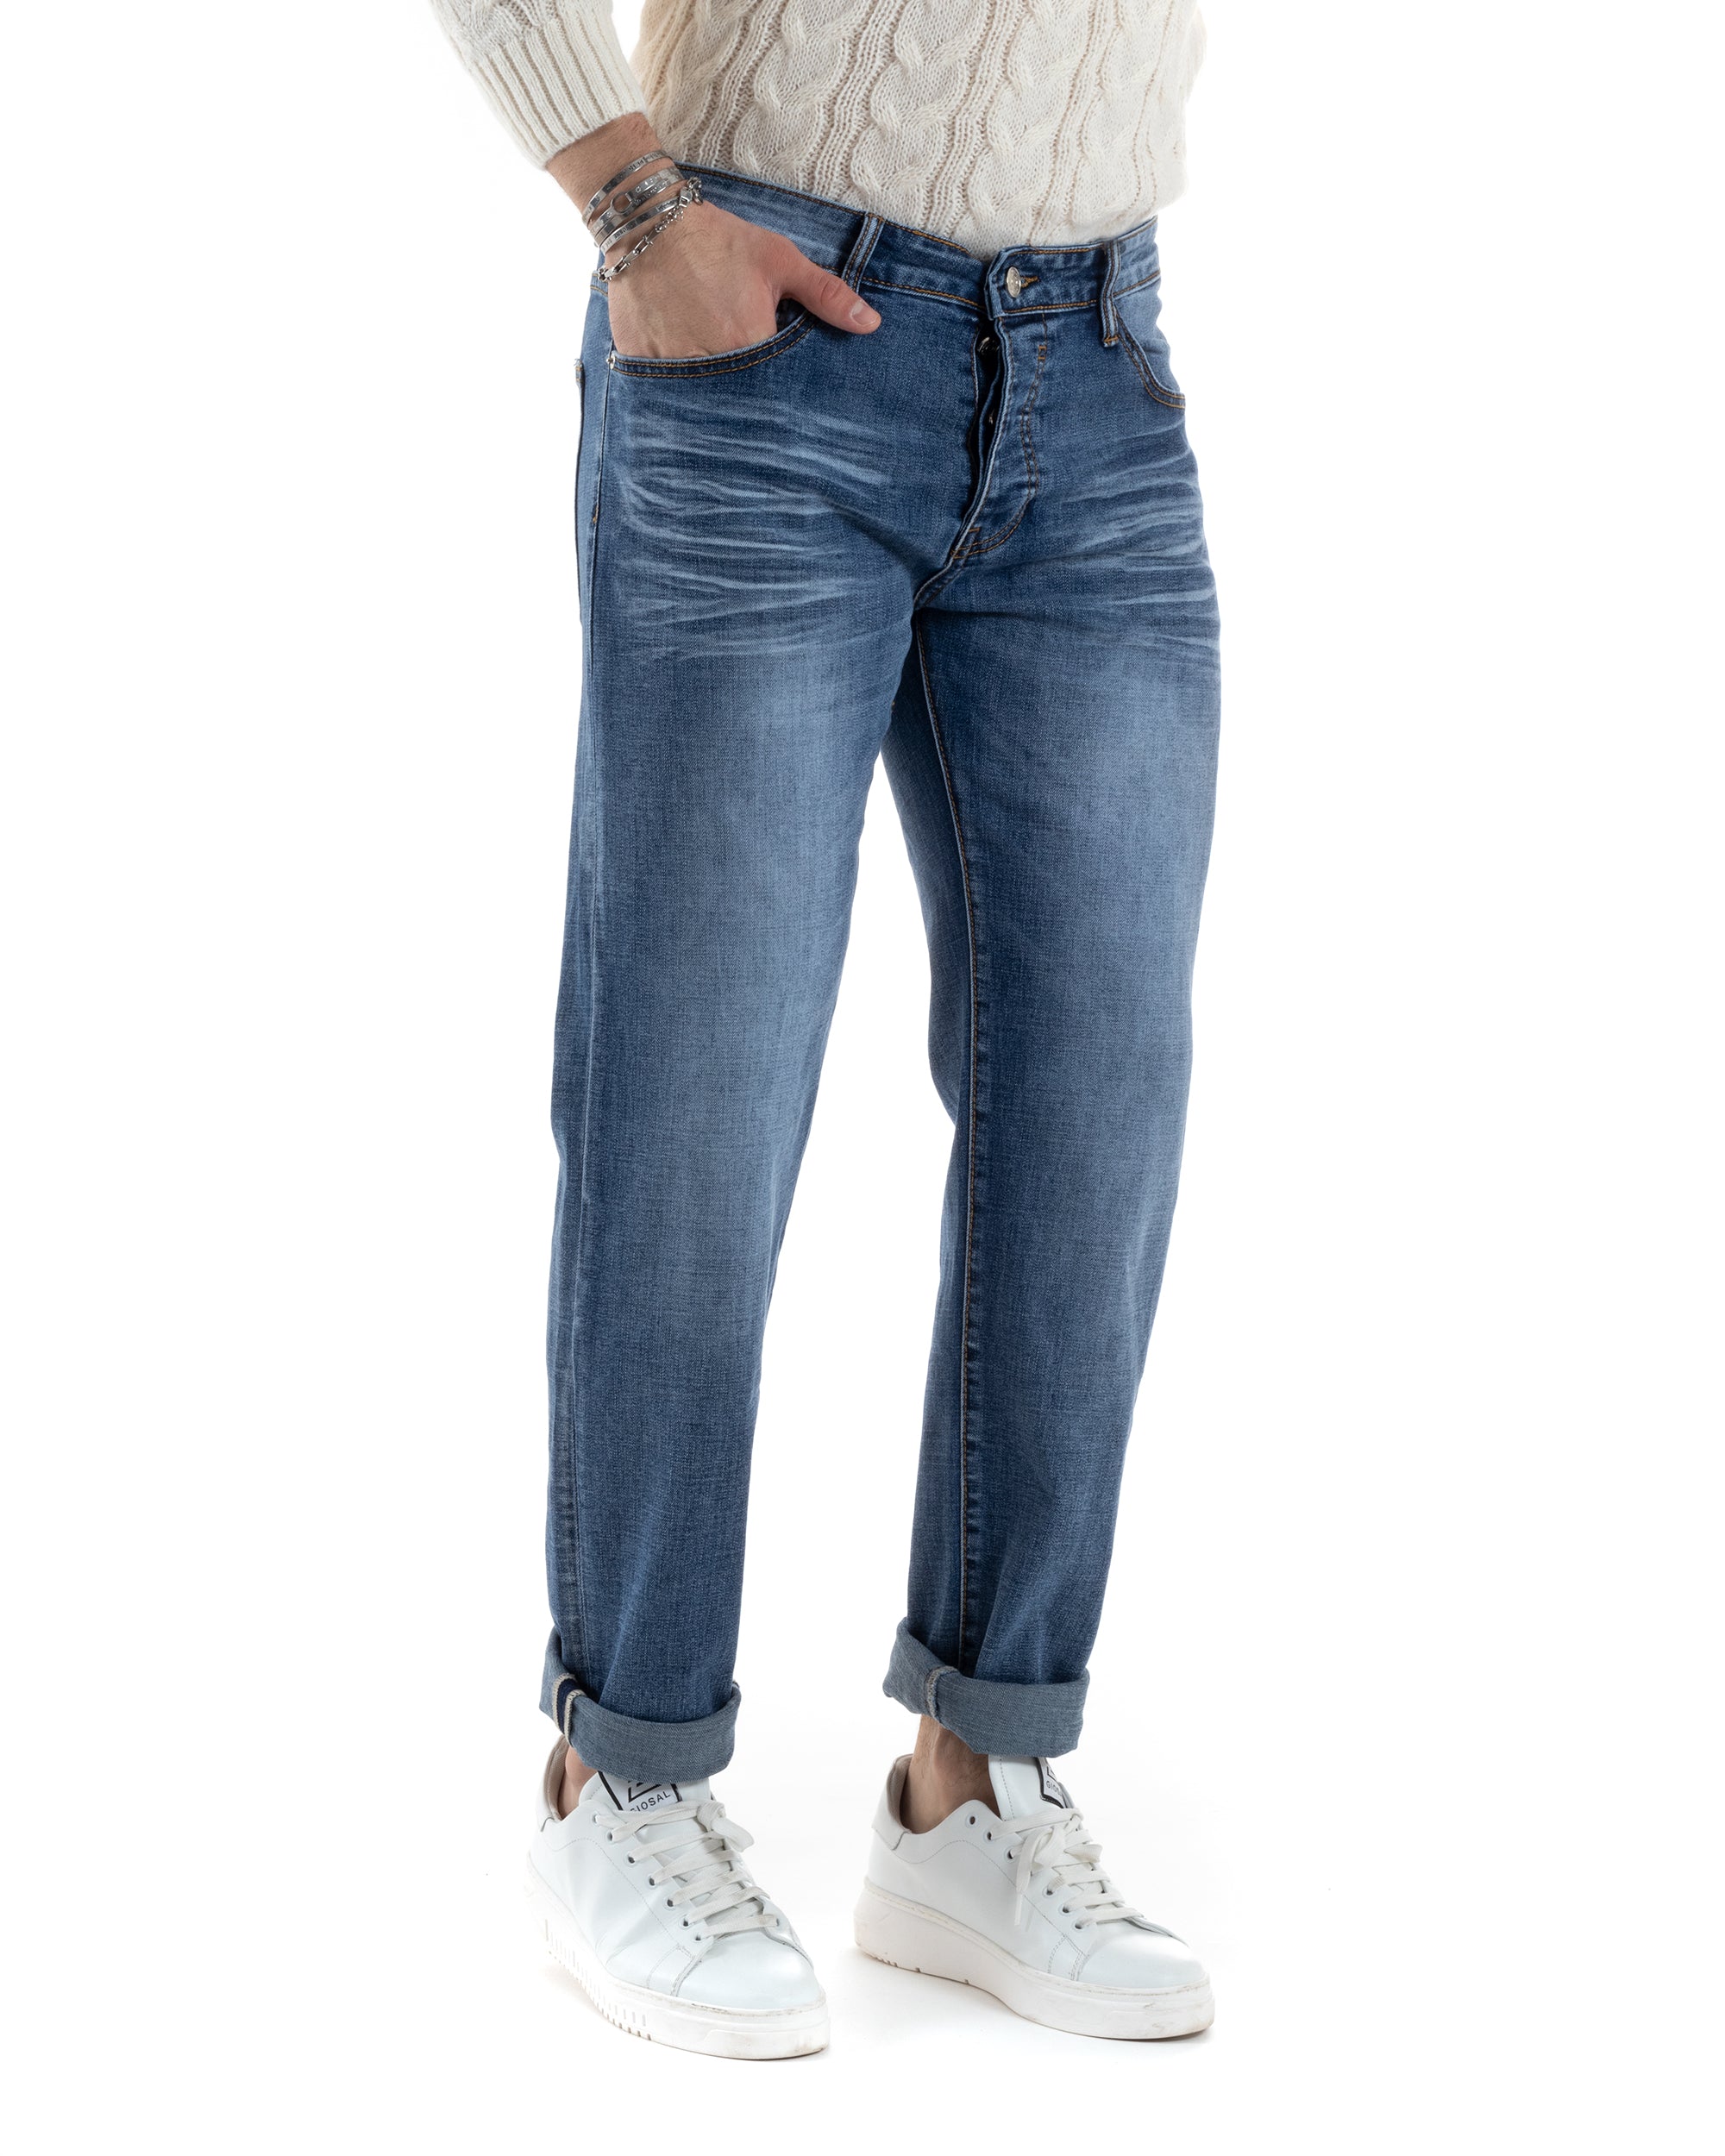 Pantaloni Uomo Jeans Cinque Tasche Slim Fit Basic Blu Denim Stone Washed GIOSAL-JS1006A